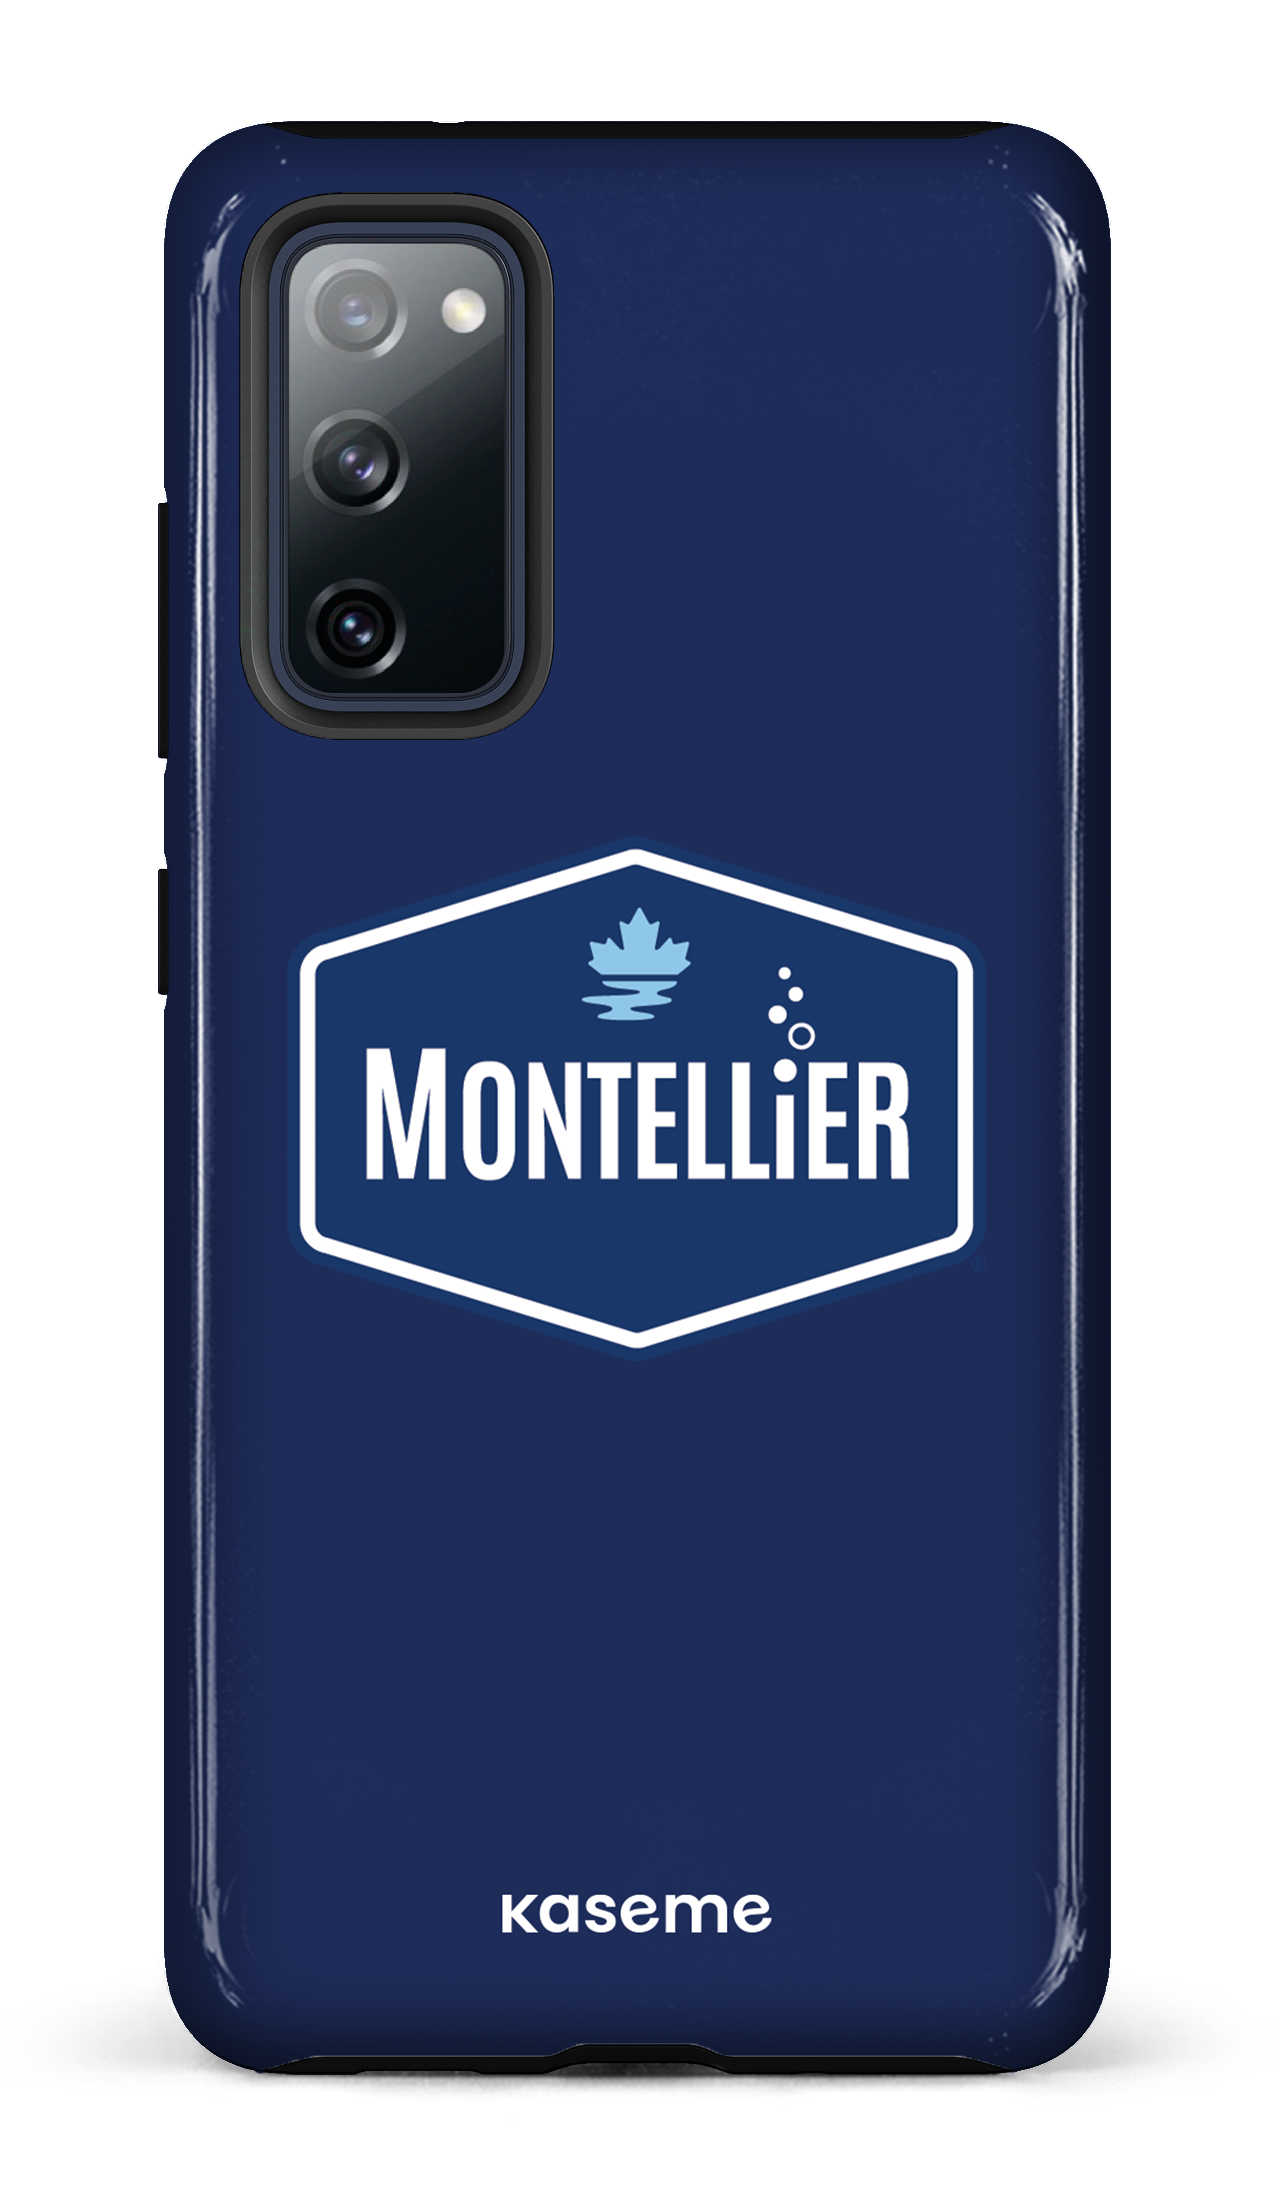 Montellier - Galaxy S20 FE